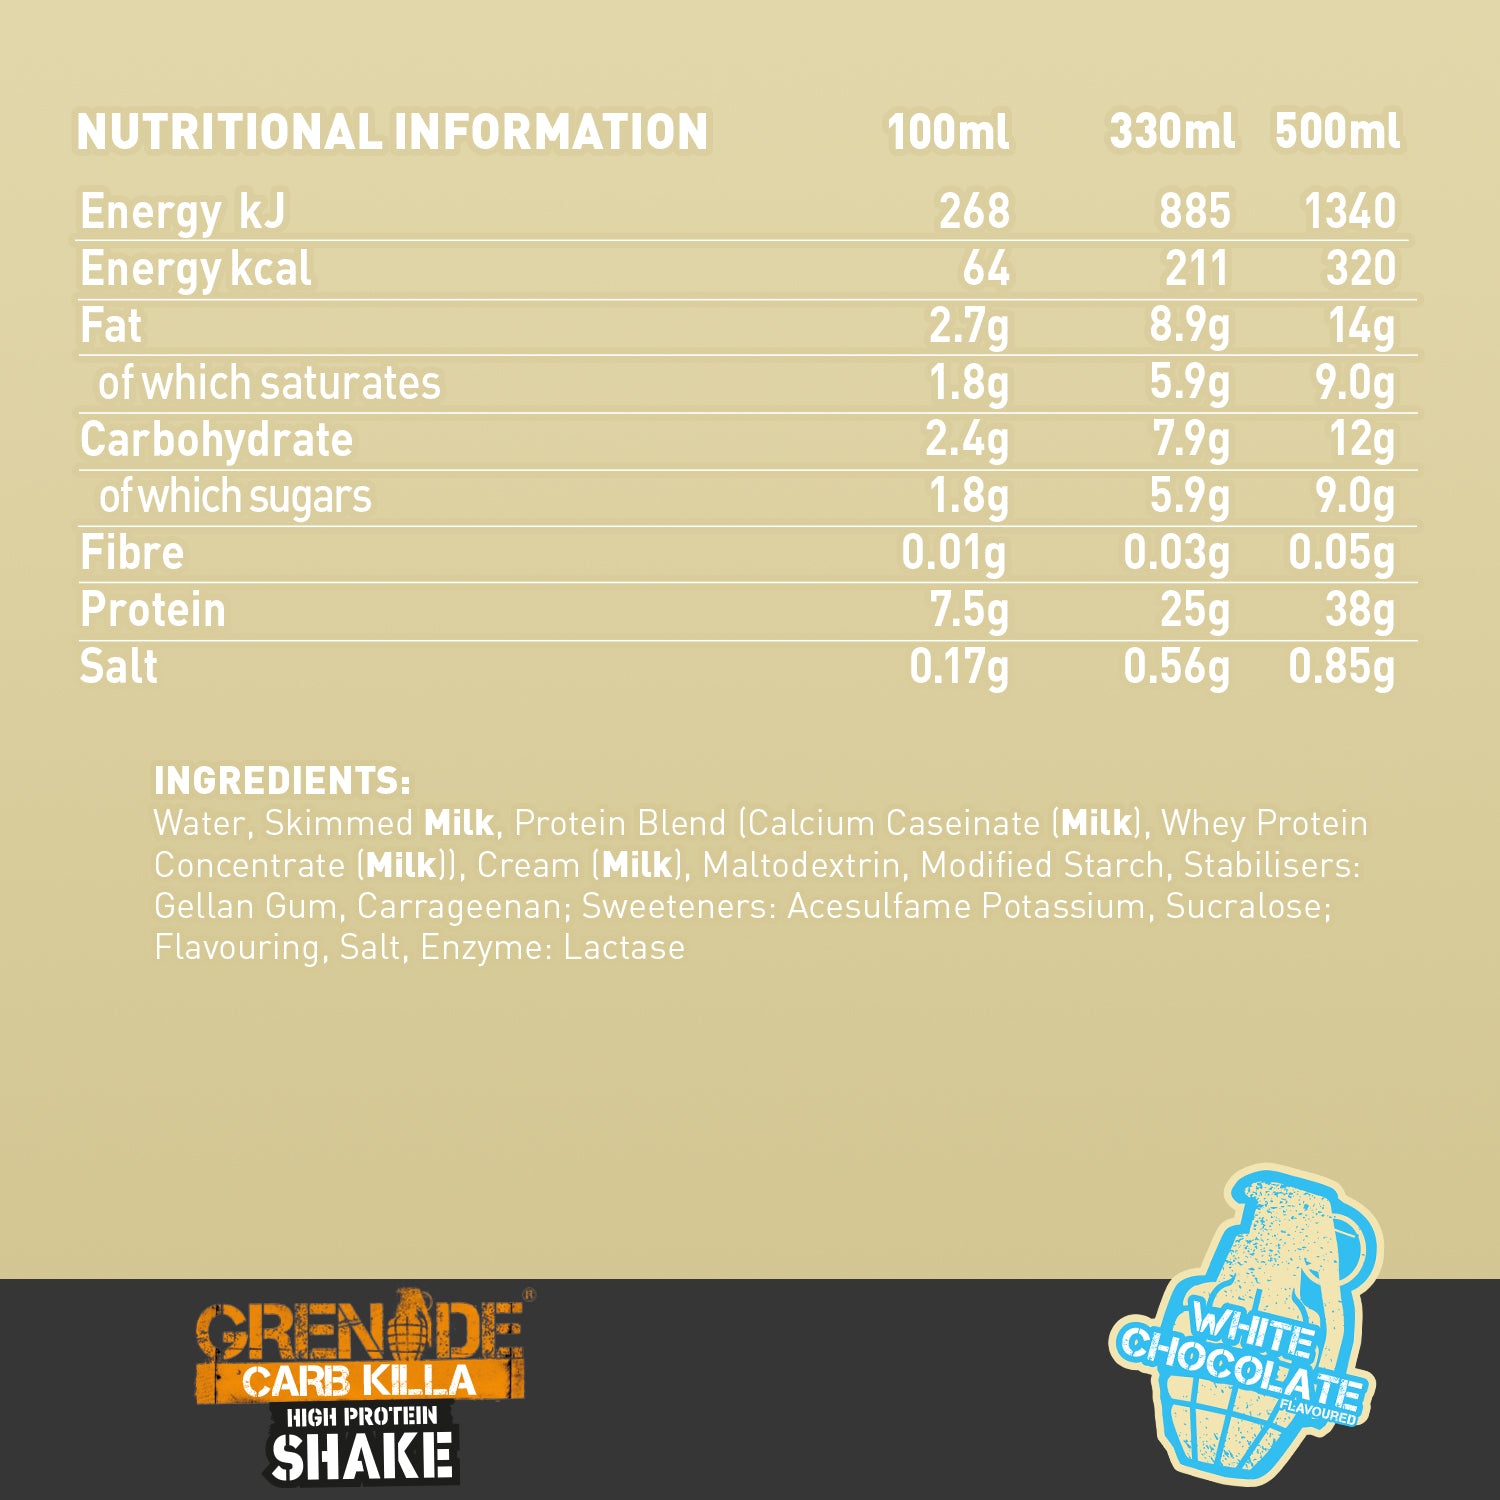 Grenade Carb Killa High Protein Shake 330ml - Nutritional Information